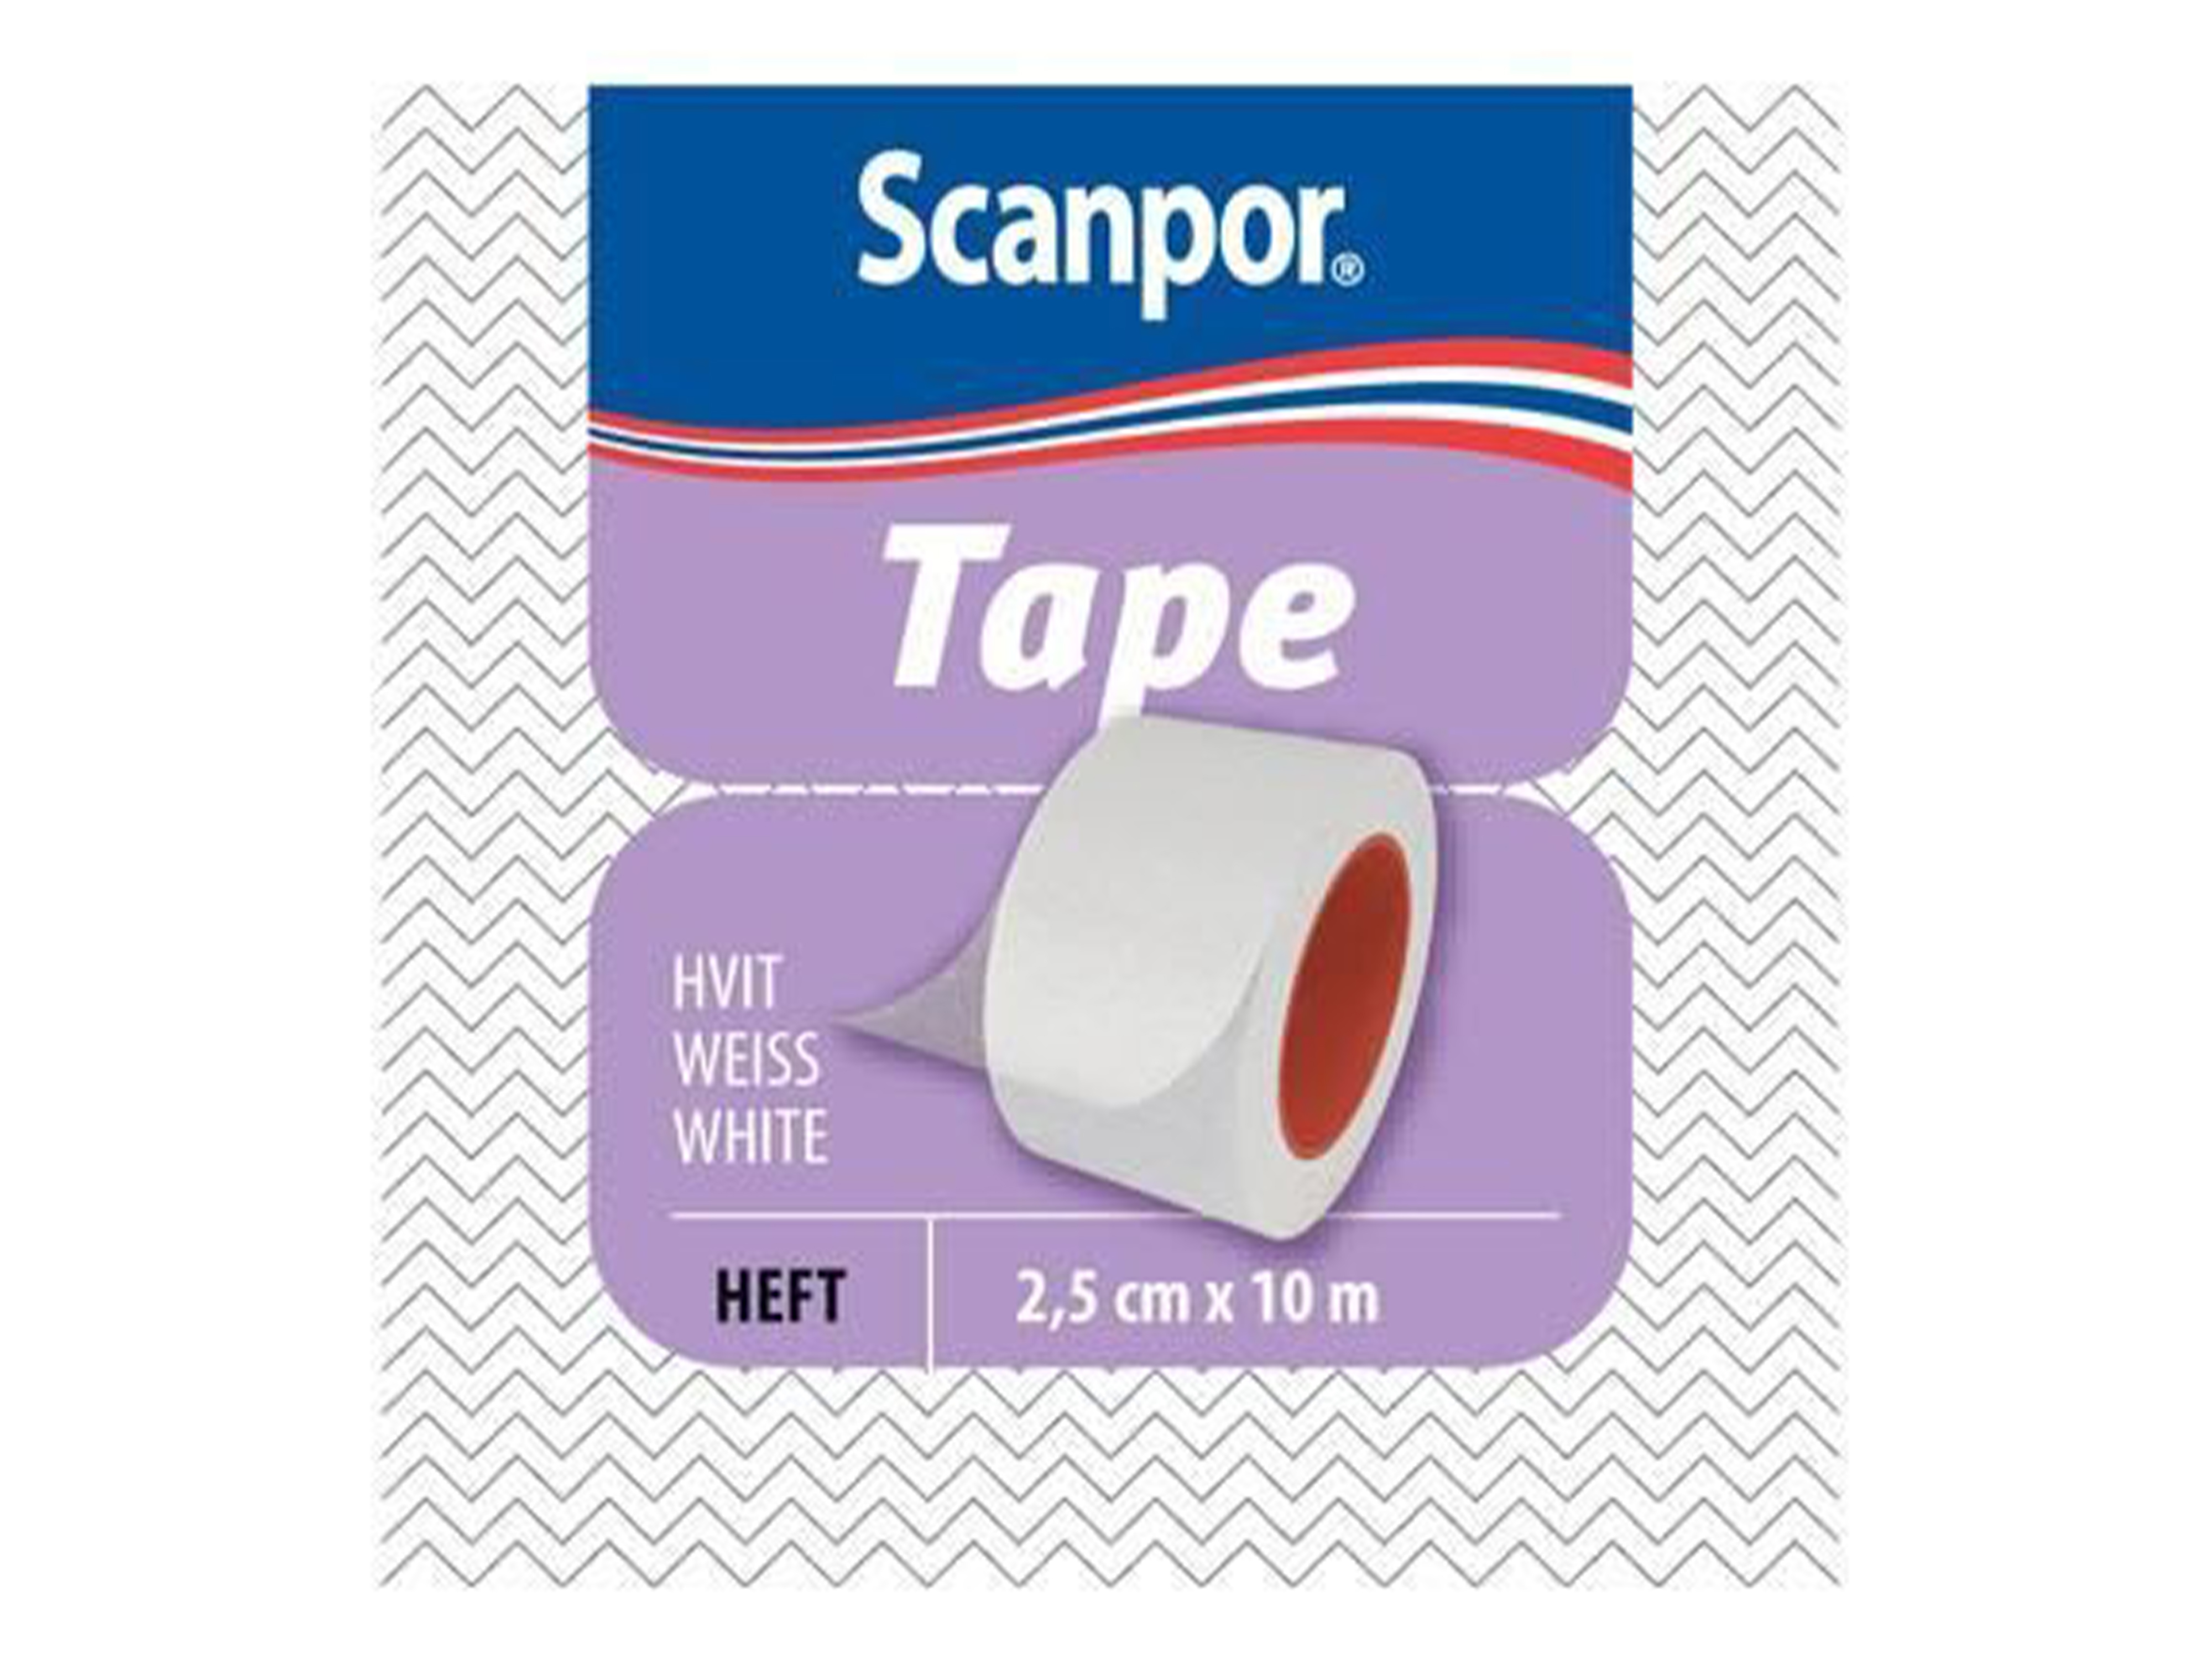 Norgesplaster Scanpor tape hvit, 2,5cm x 10m, 1 stk.